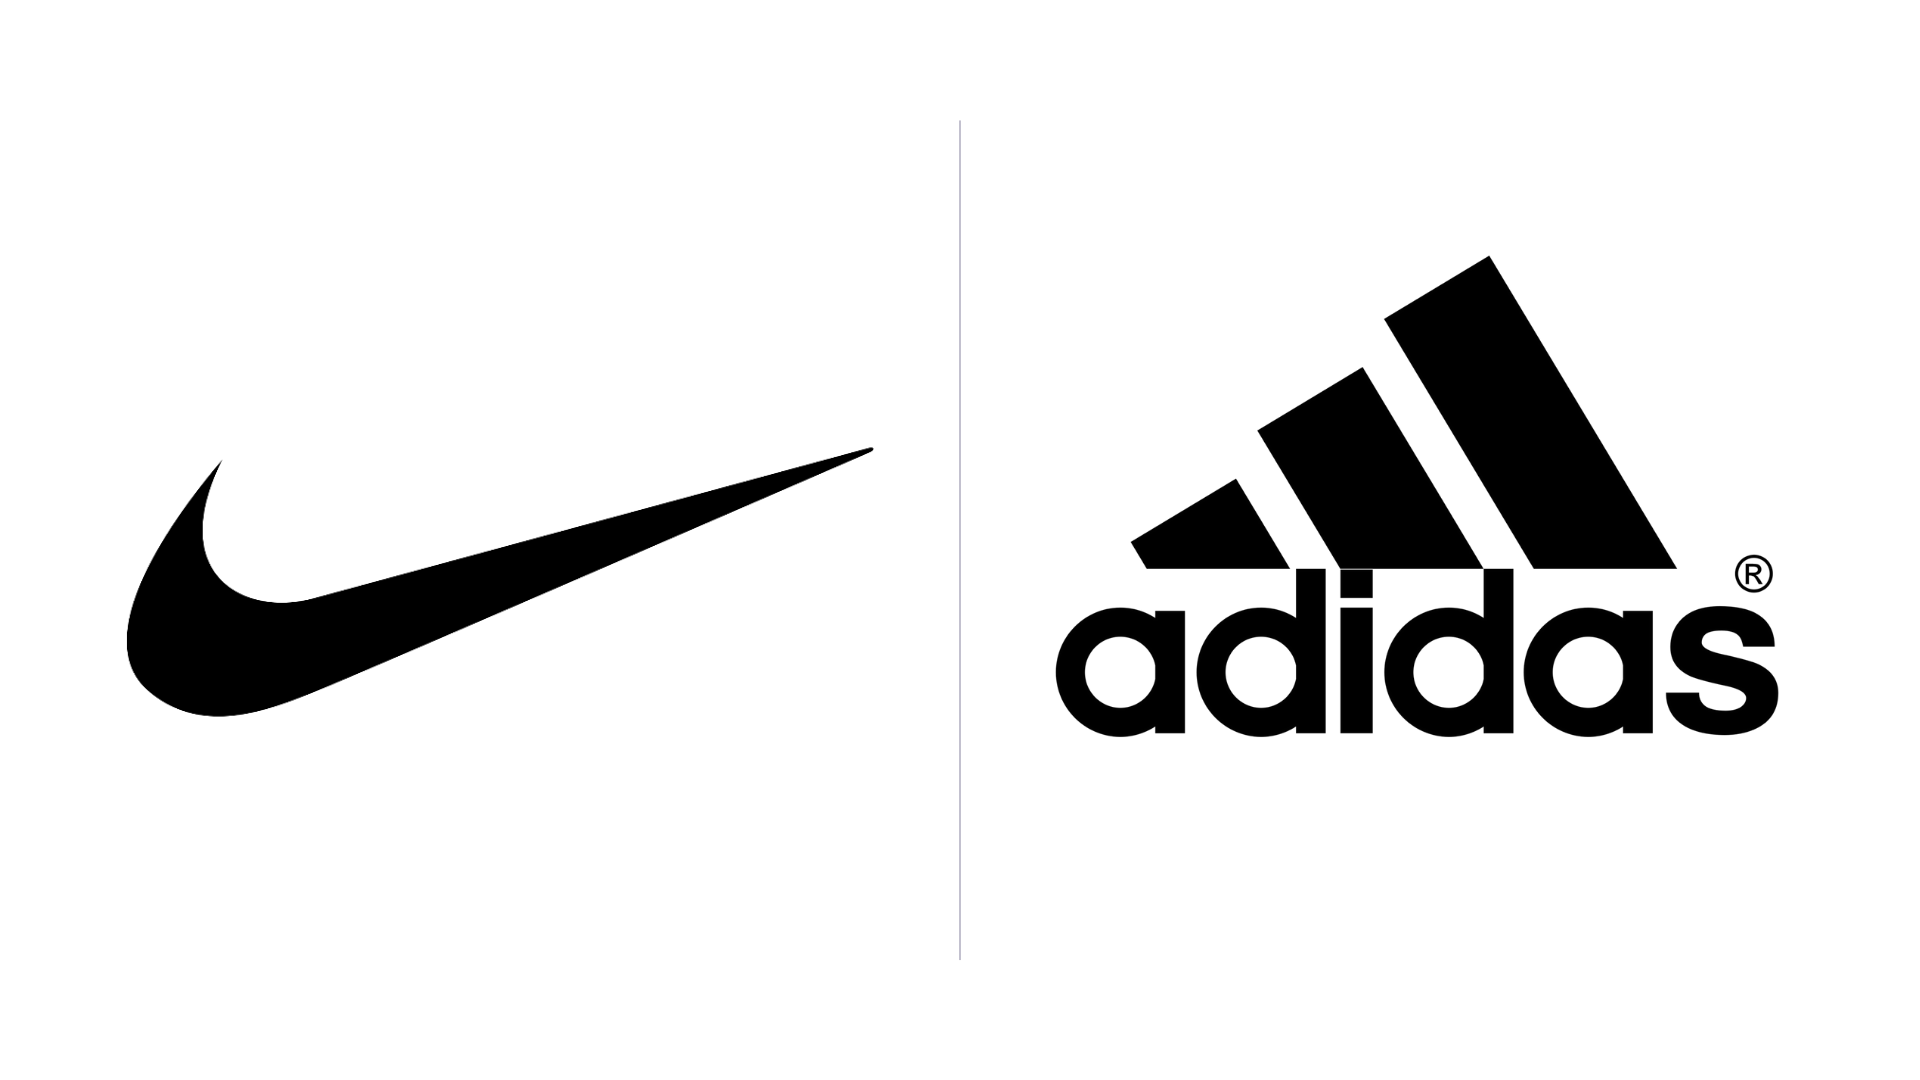 nike and adidas logos